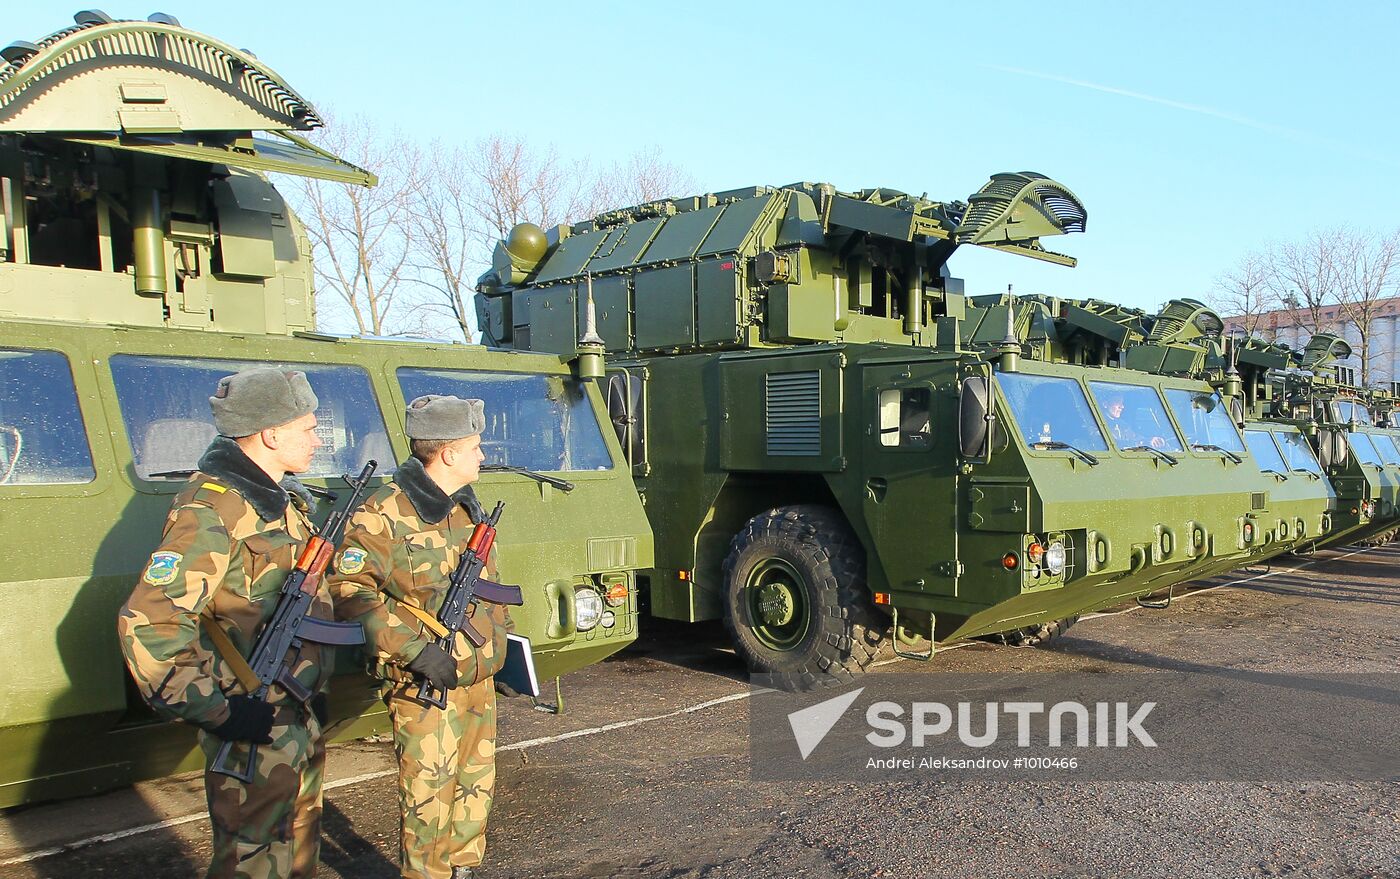 TOR-M2 missile system put into service in Baranovichi